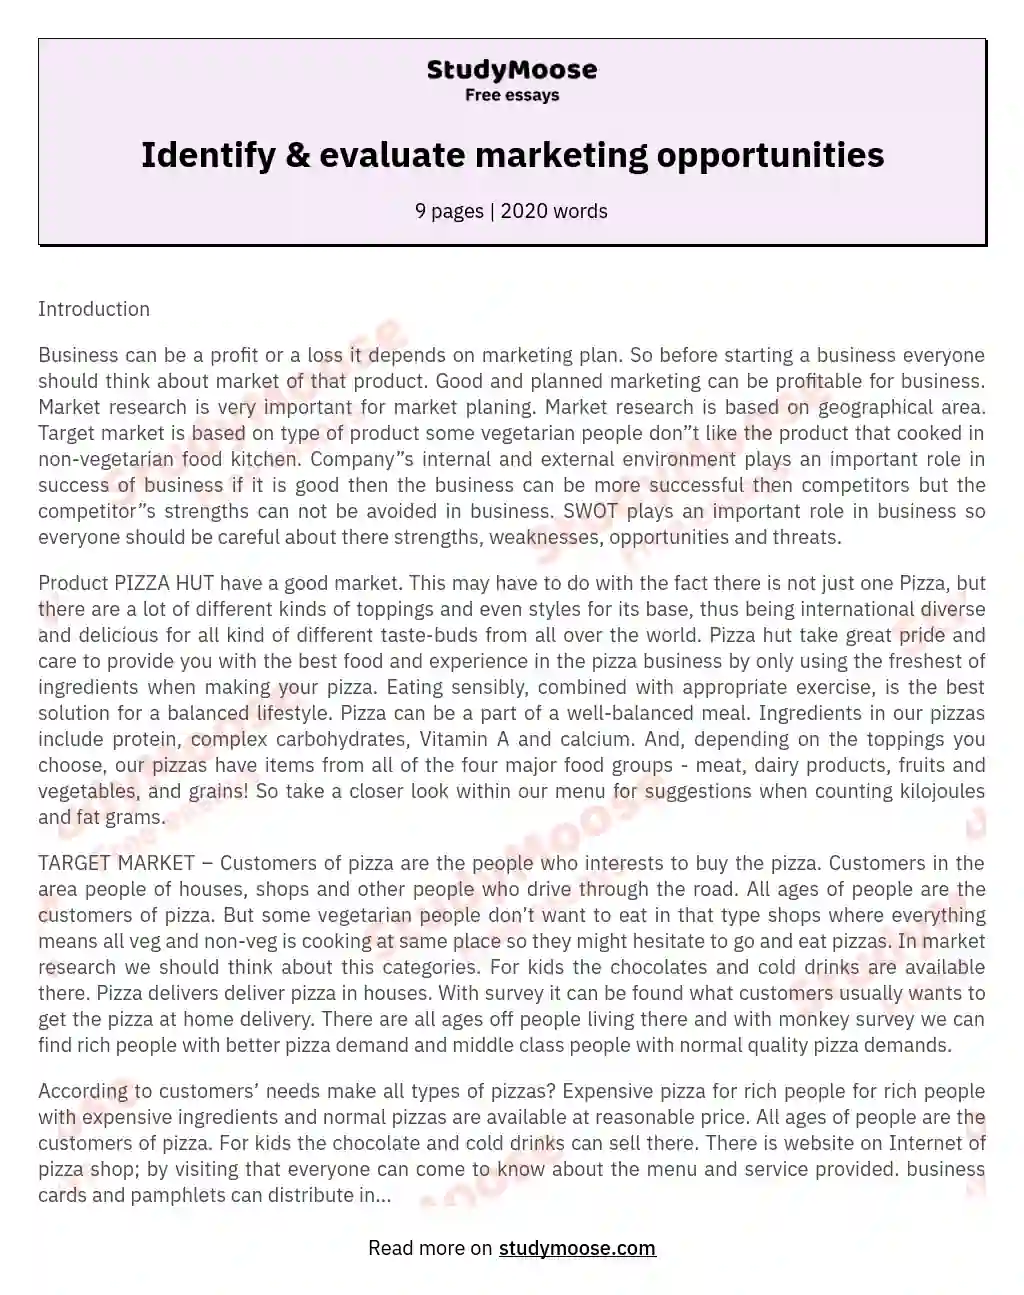 Identify & evaluate marketing opportunities essay